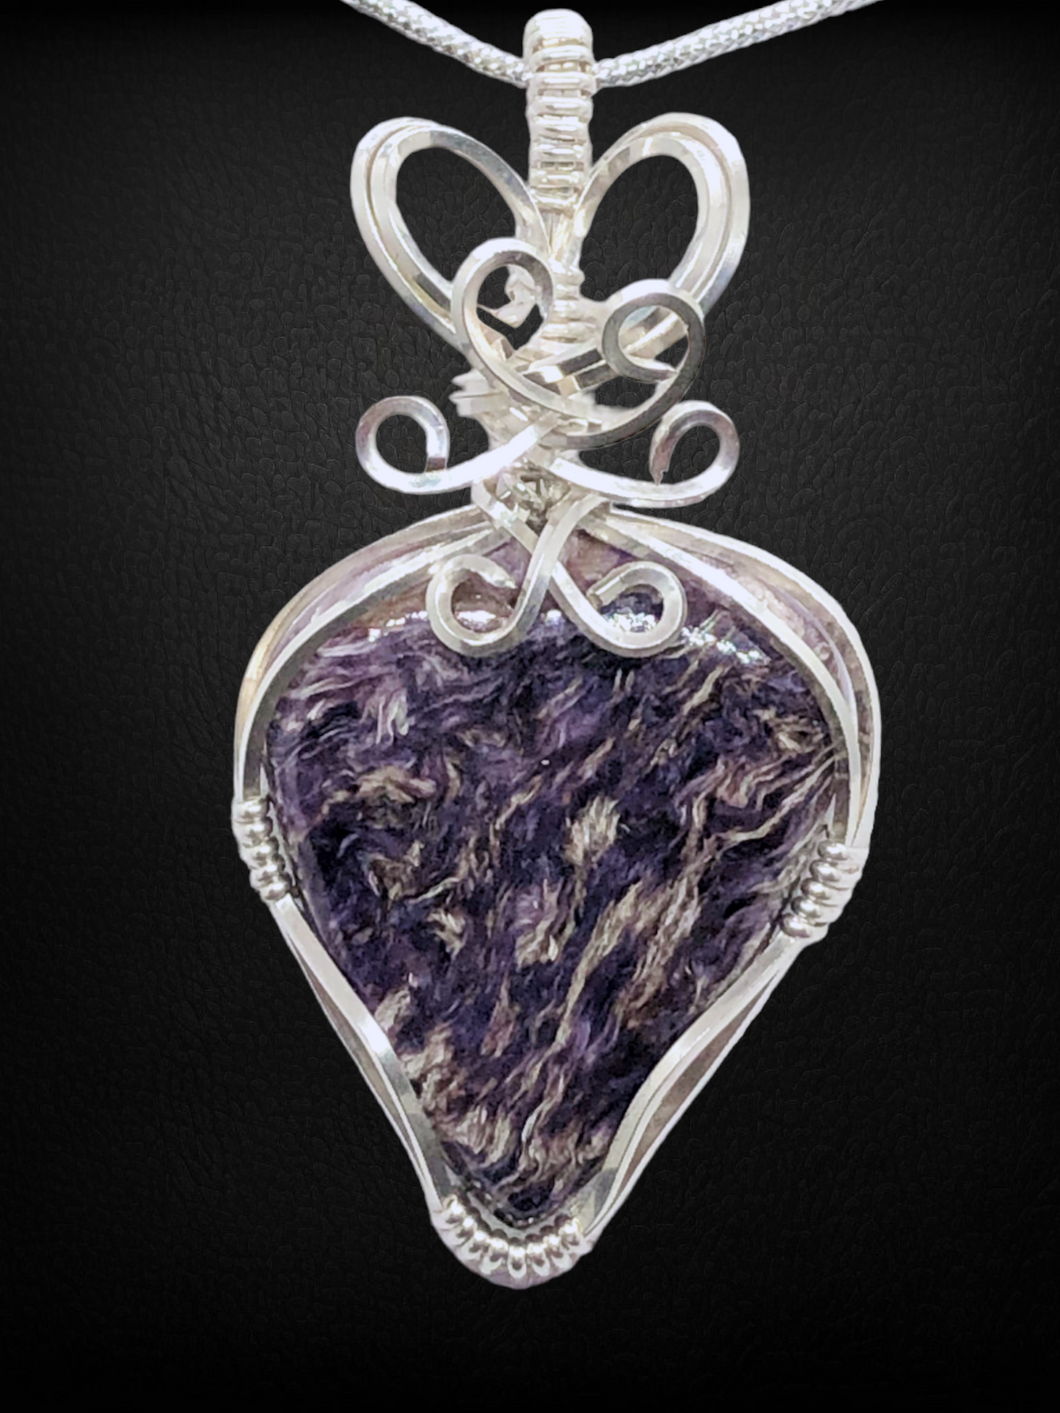 Purple Charoite Stone Pendant Necklace In Sterling Silver ~ Wire Wrapped Pendant